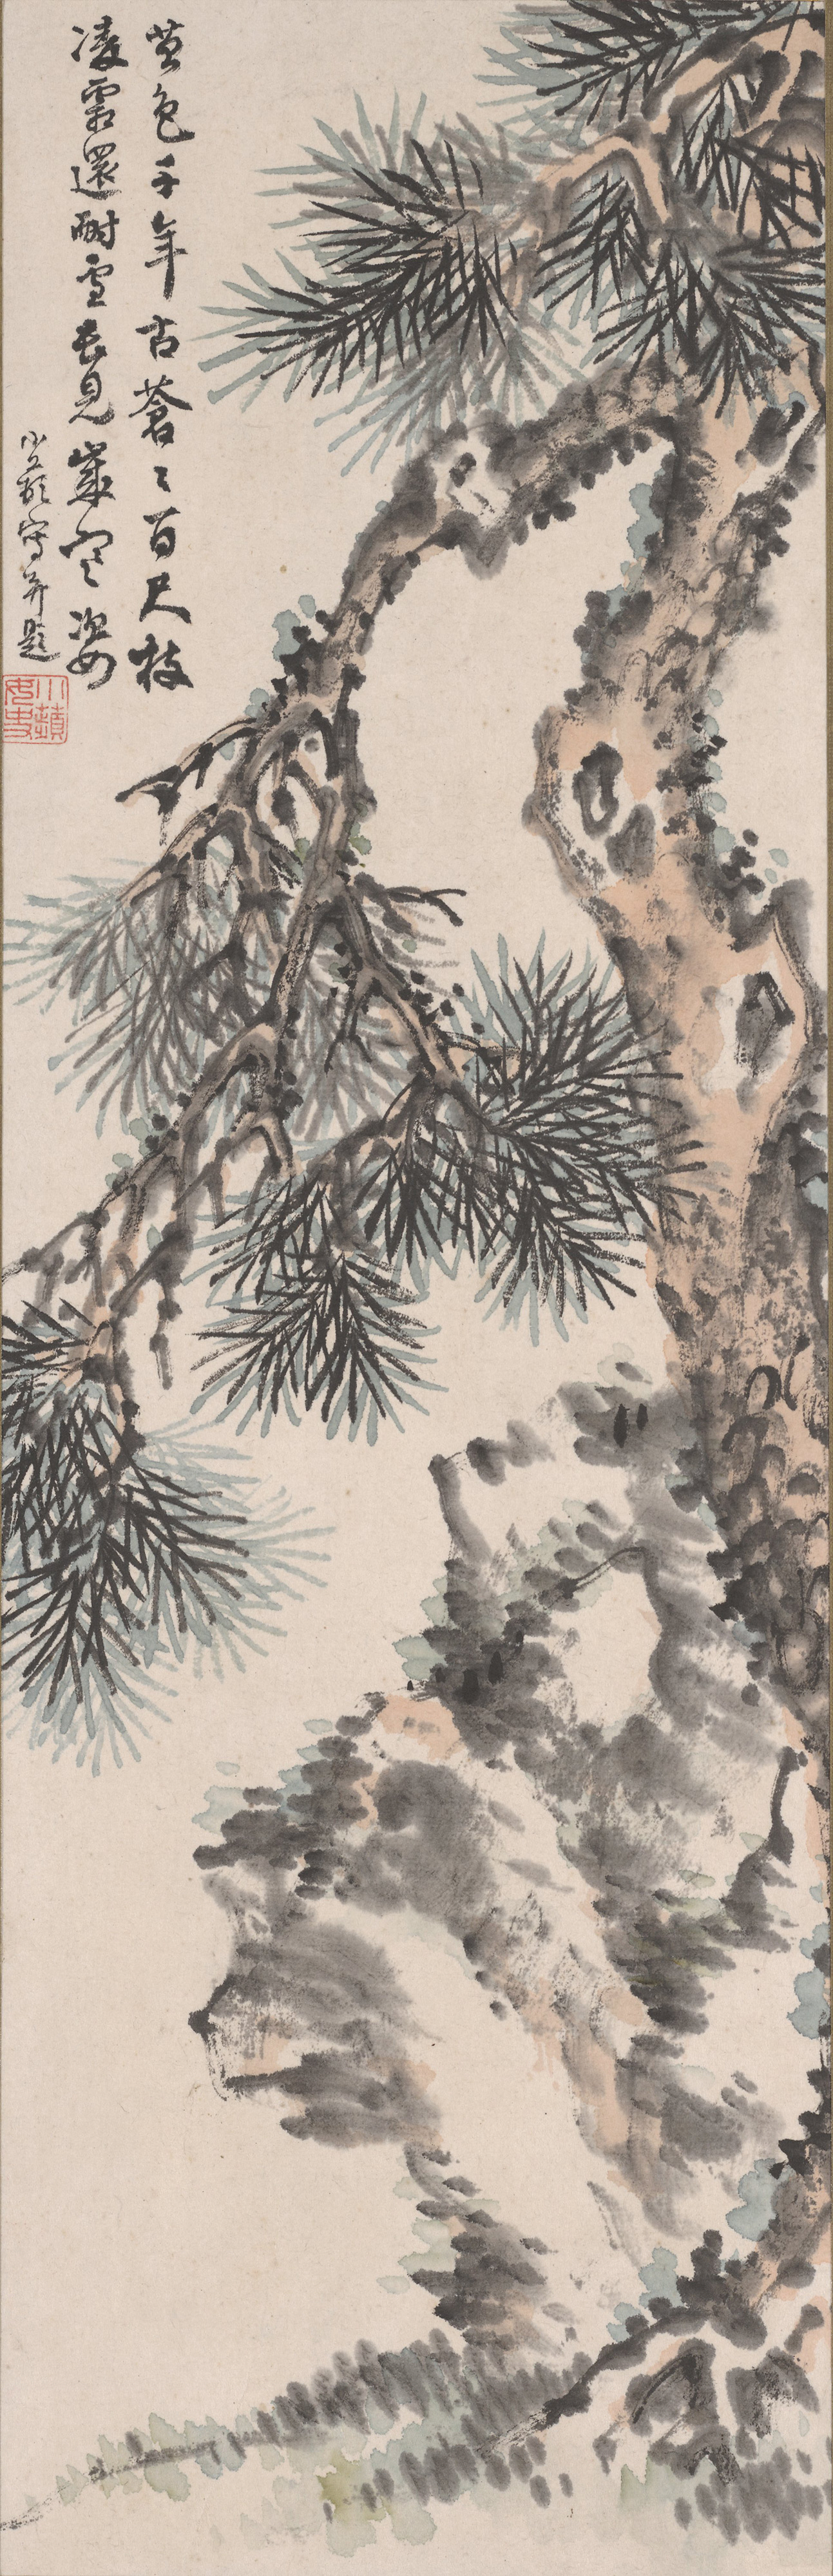 Noguchi Shōhin, Pine and Rock, 1900, Minneapolis Institute of Art, Minneapolis, MN, USA.